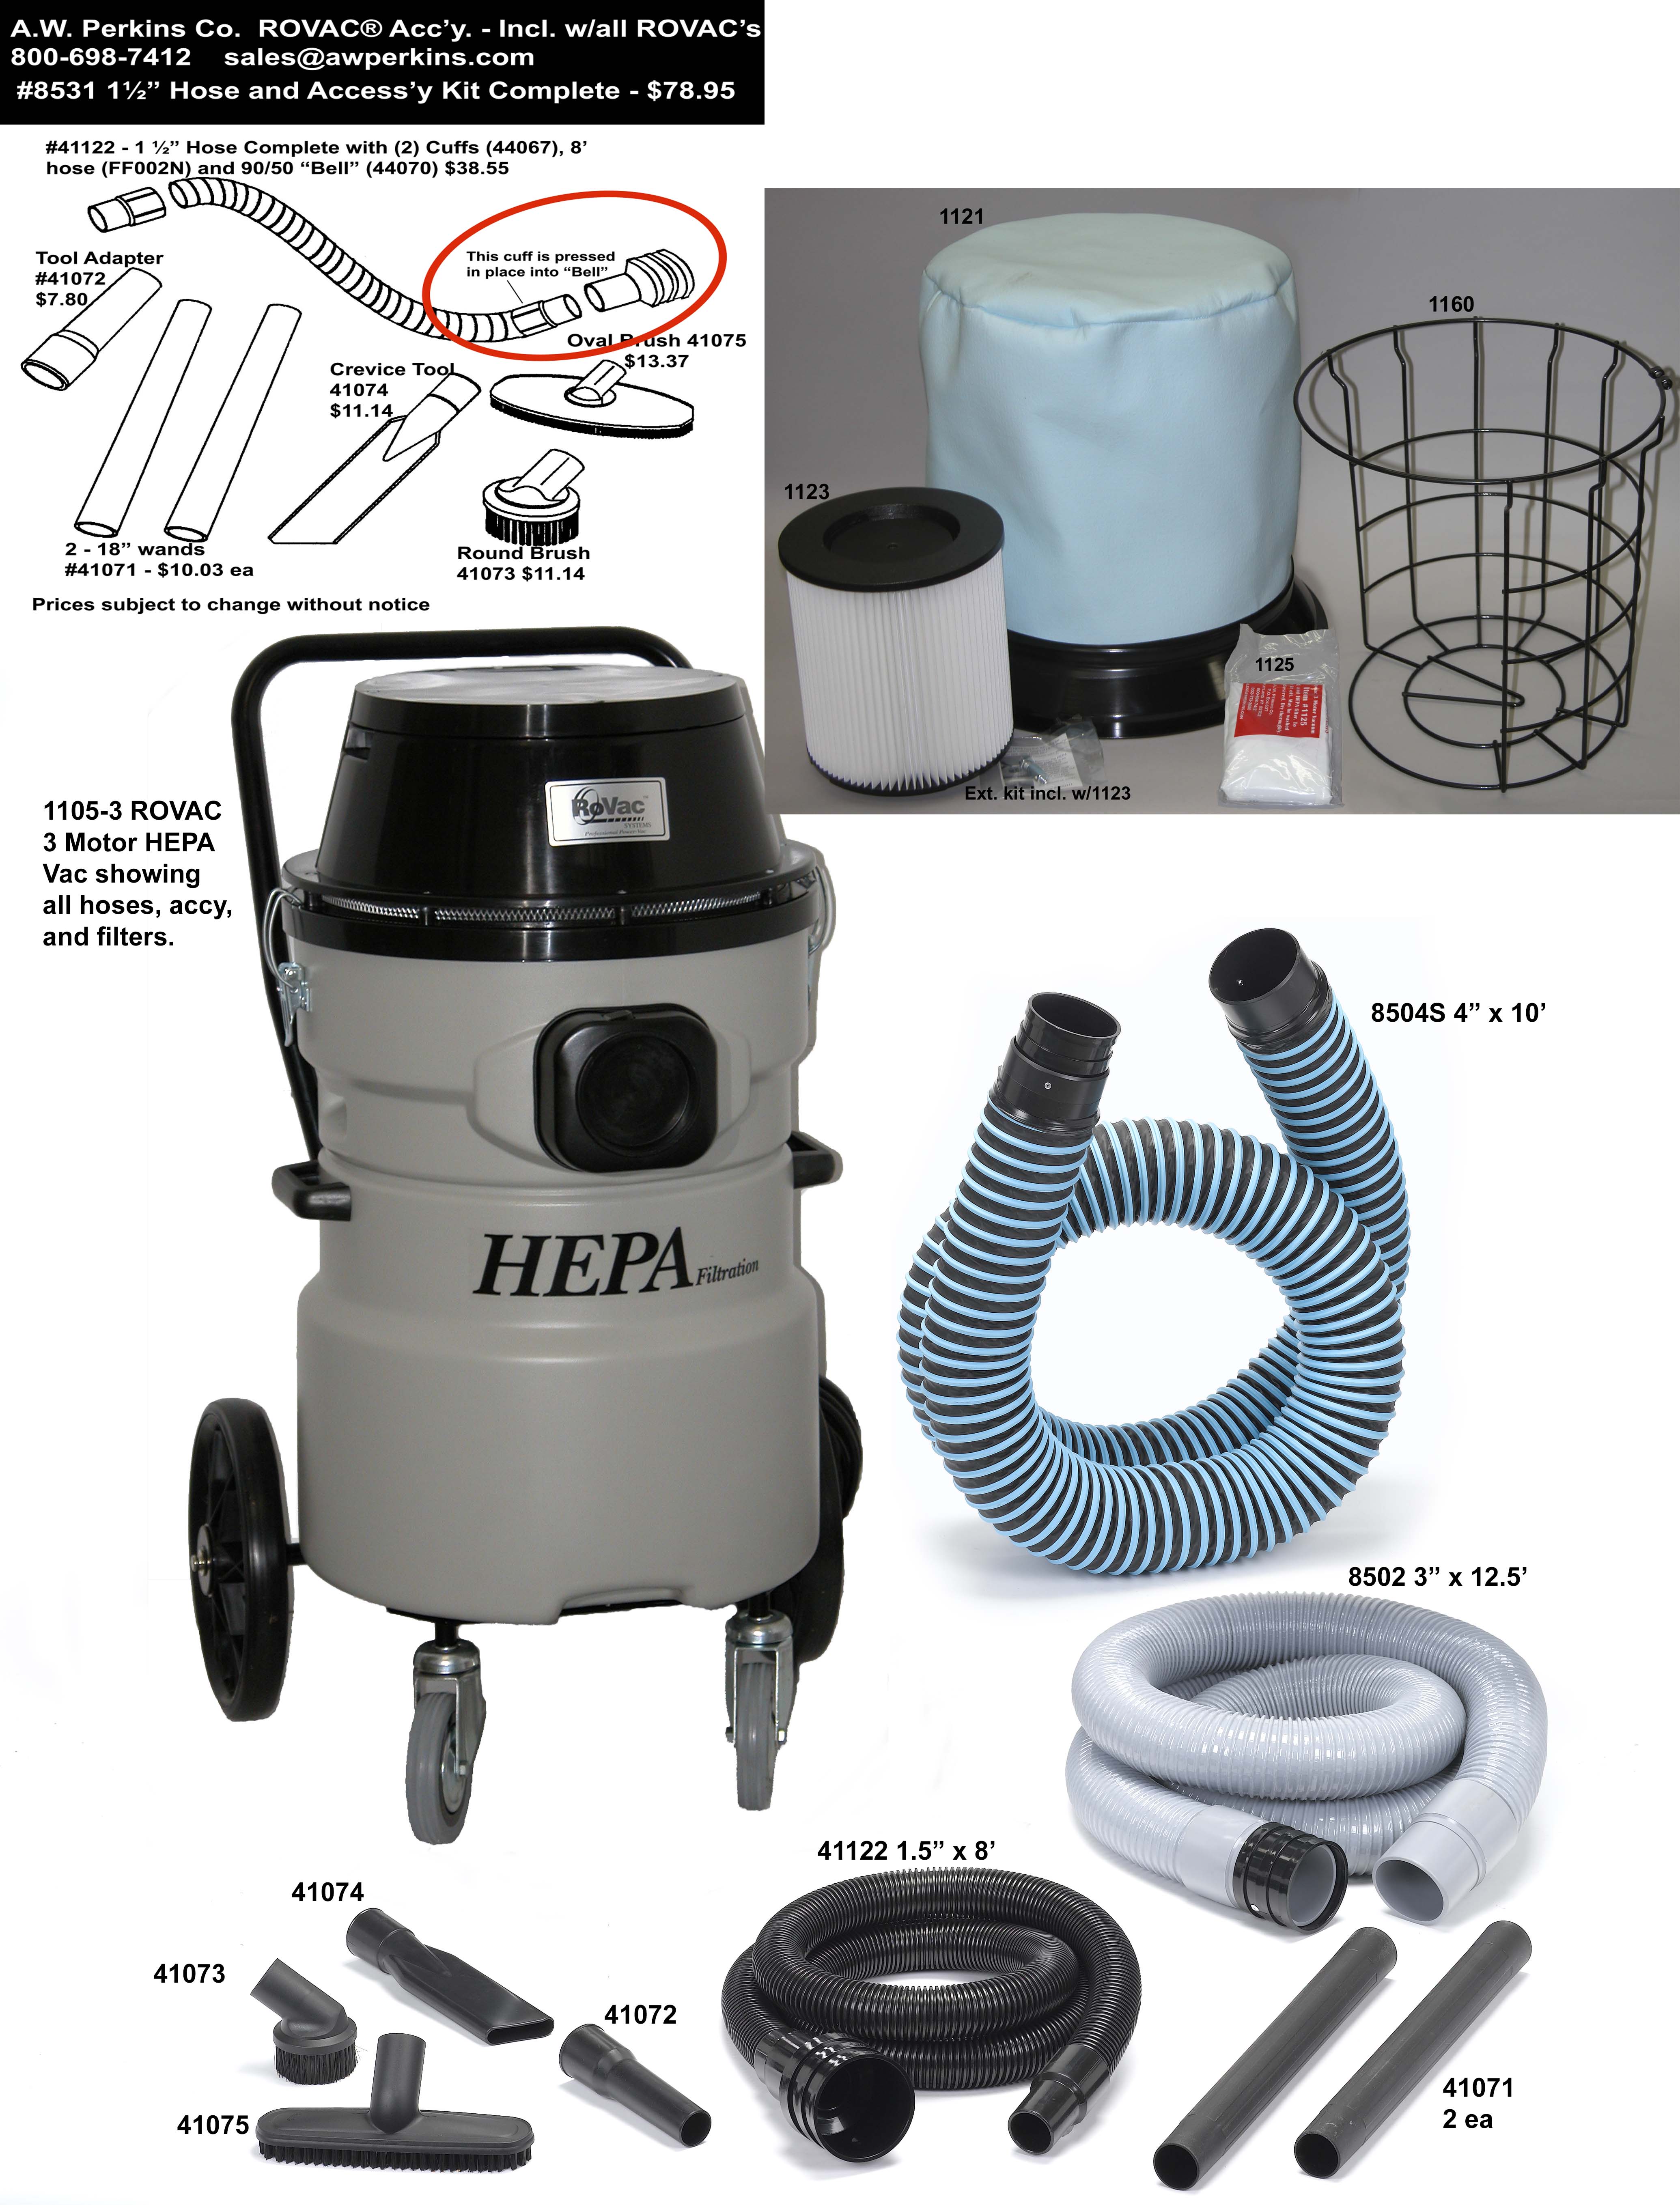 1105-3 Rovac® 3 Motor Chimney and Dryer Vent HEPA Vacuum